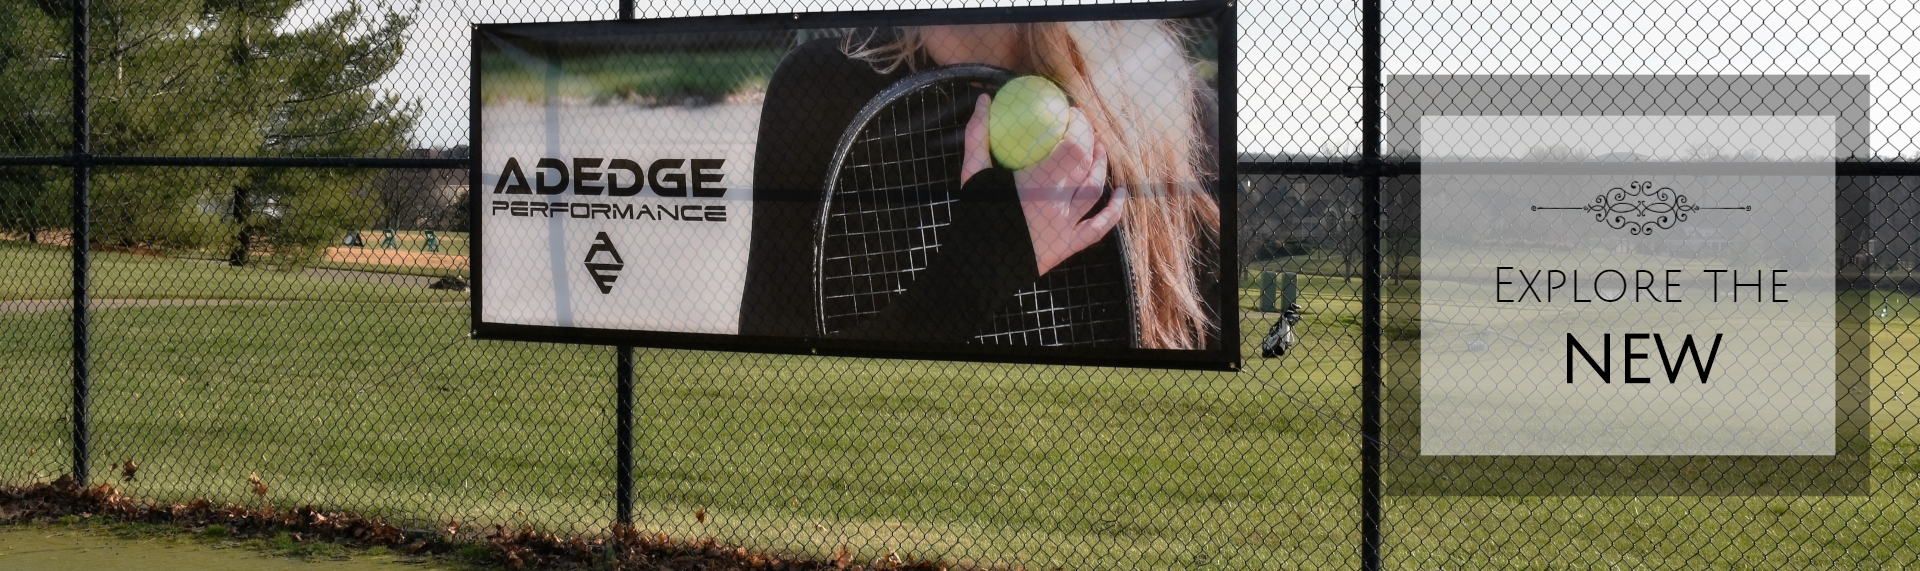 Tennis store Banner1